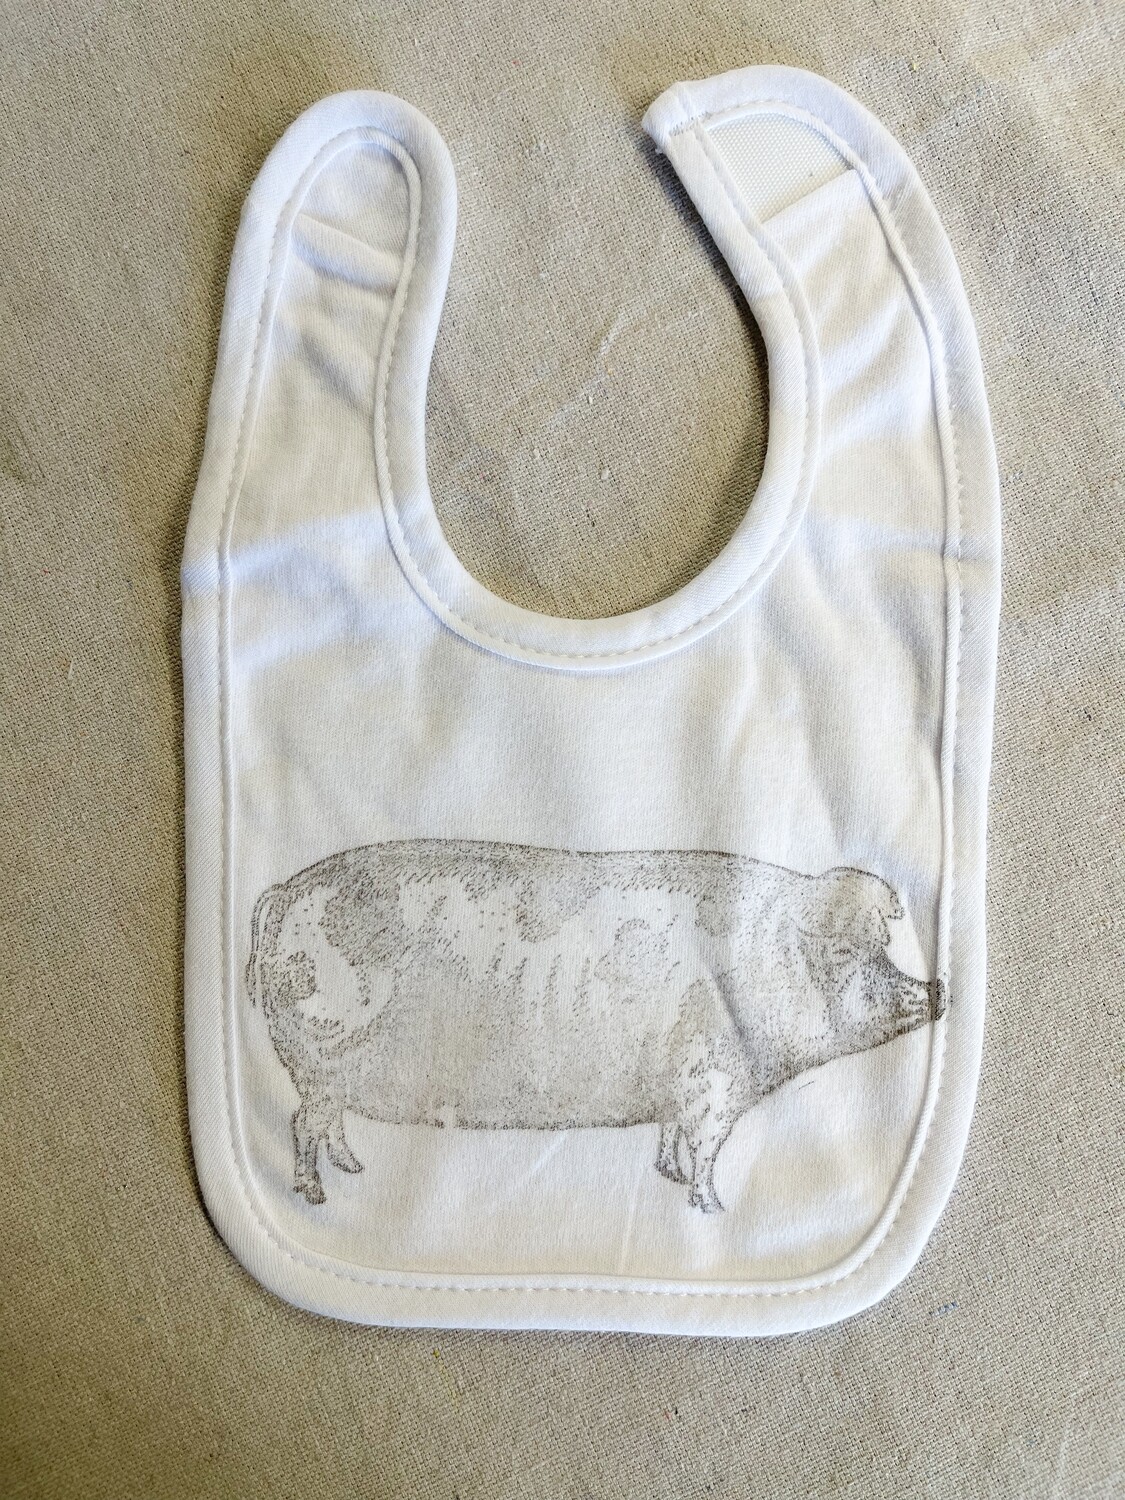 Pig Print White Baby Bib